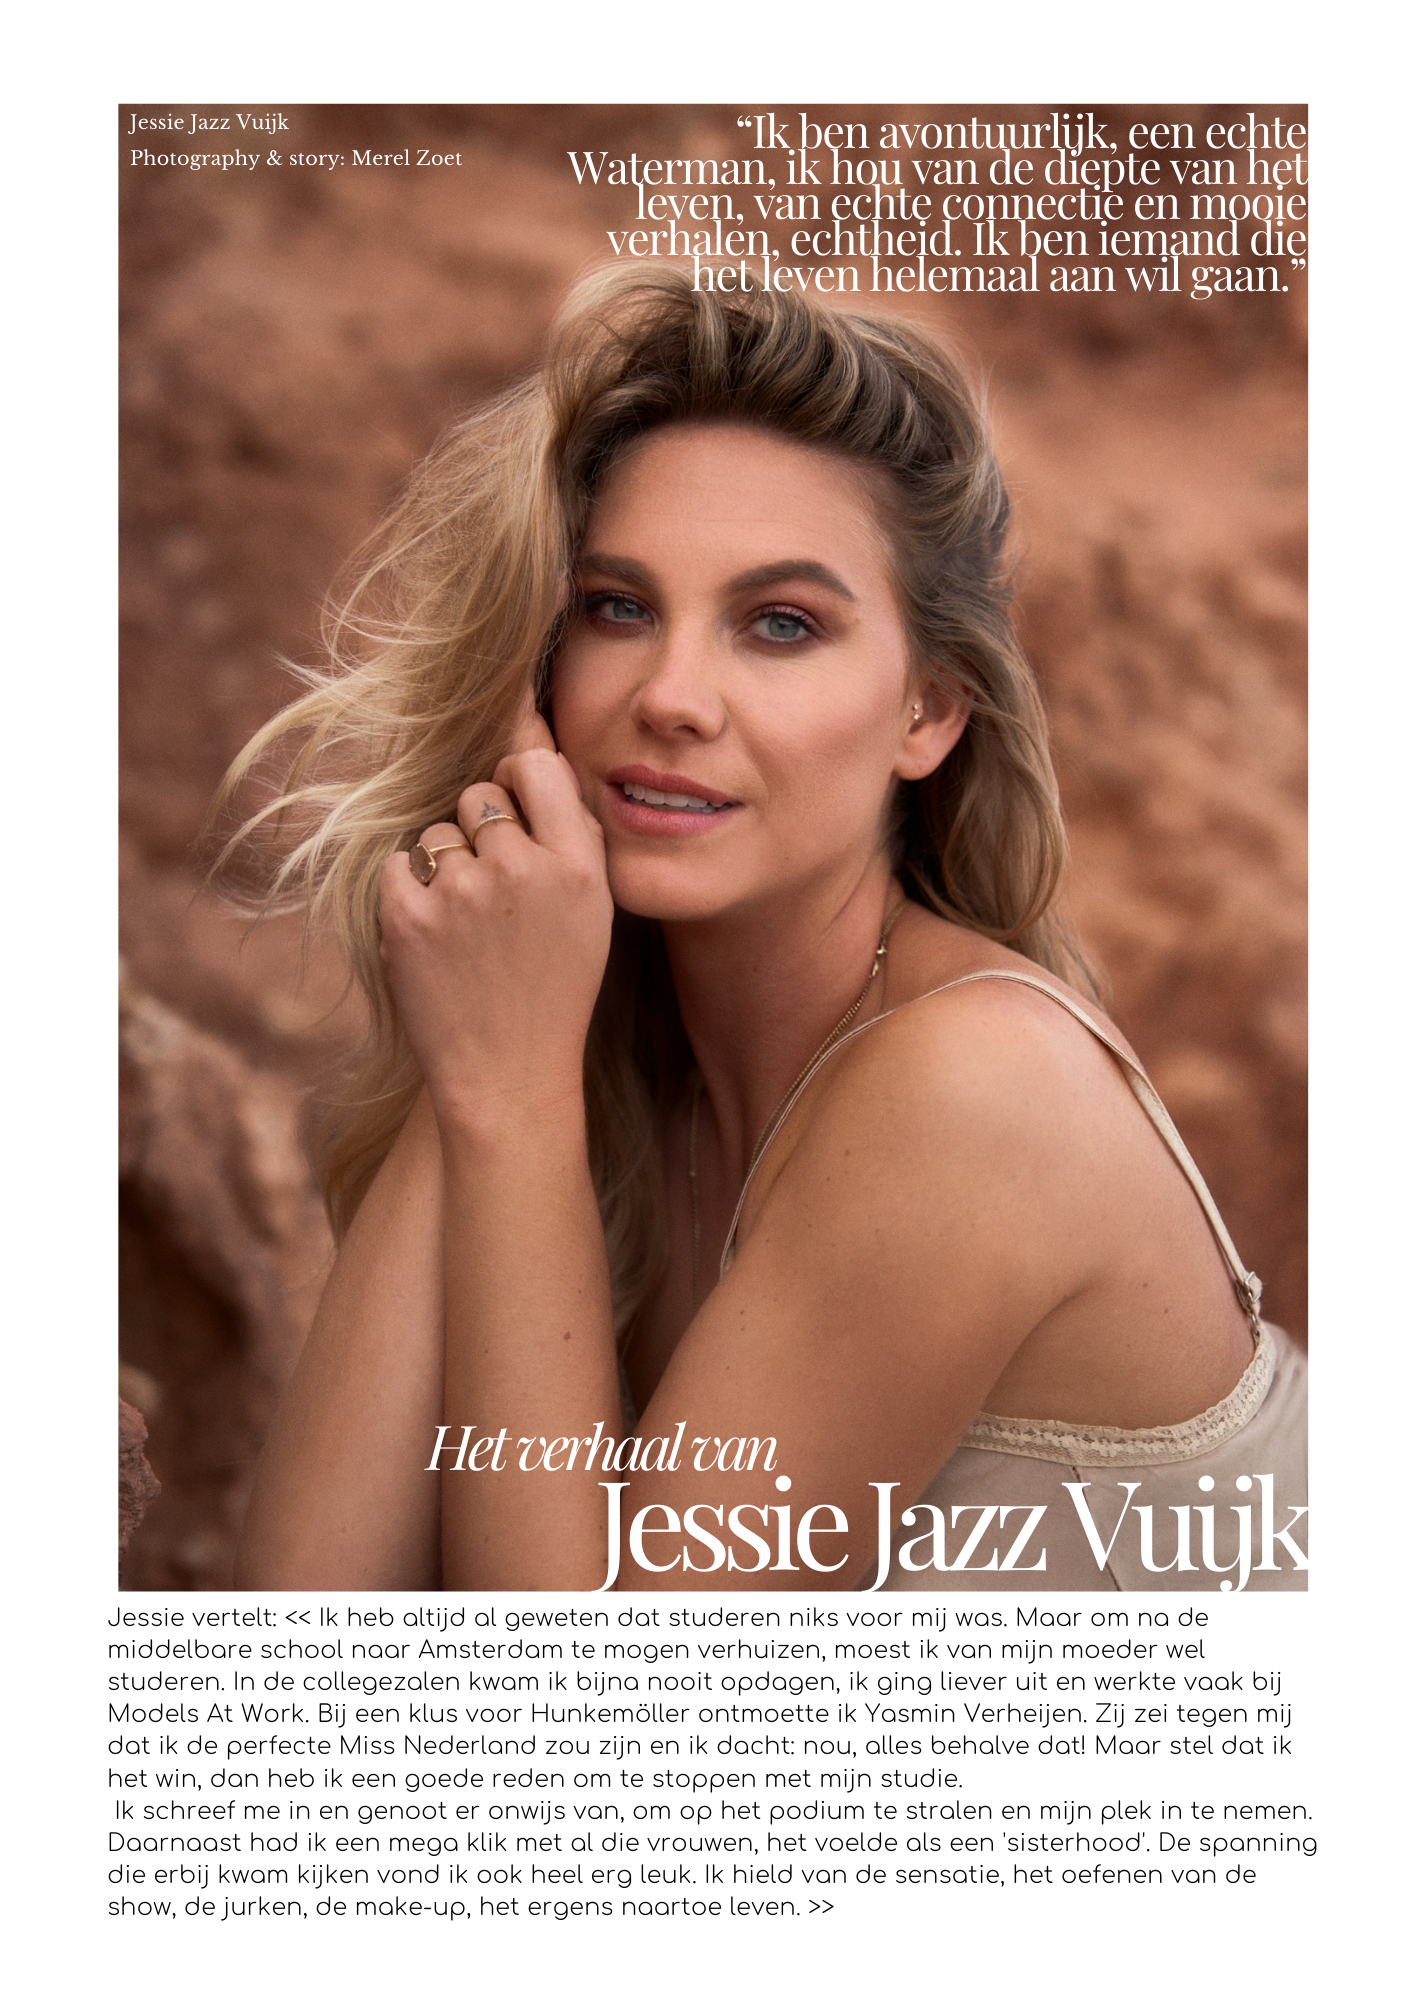 3Jessie Jazz by Merel Zoet.png